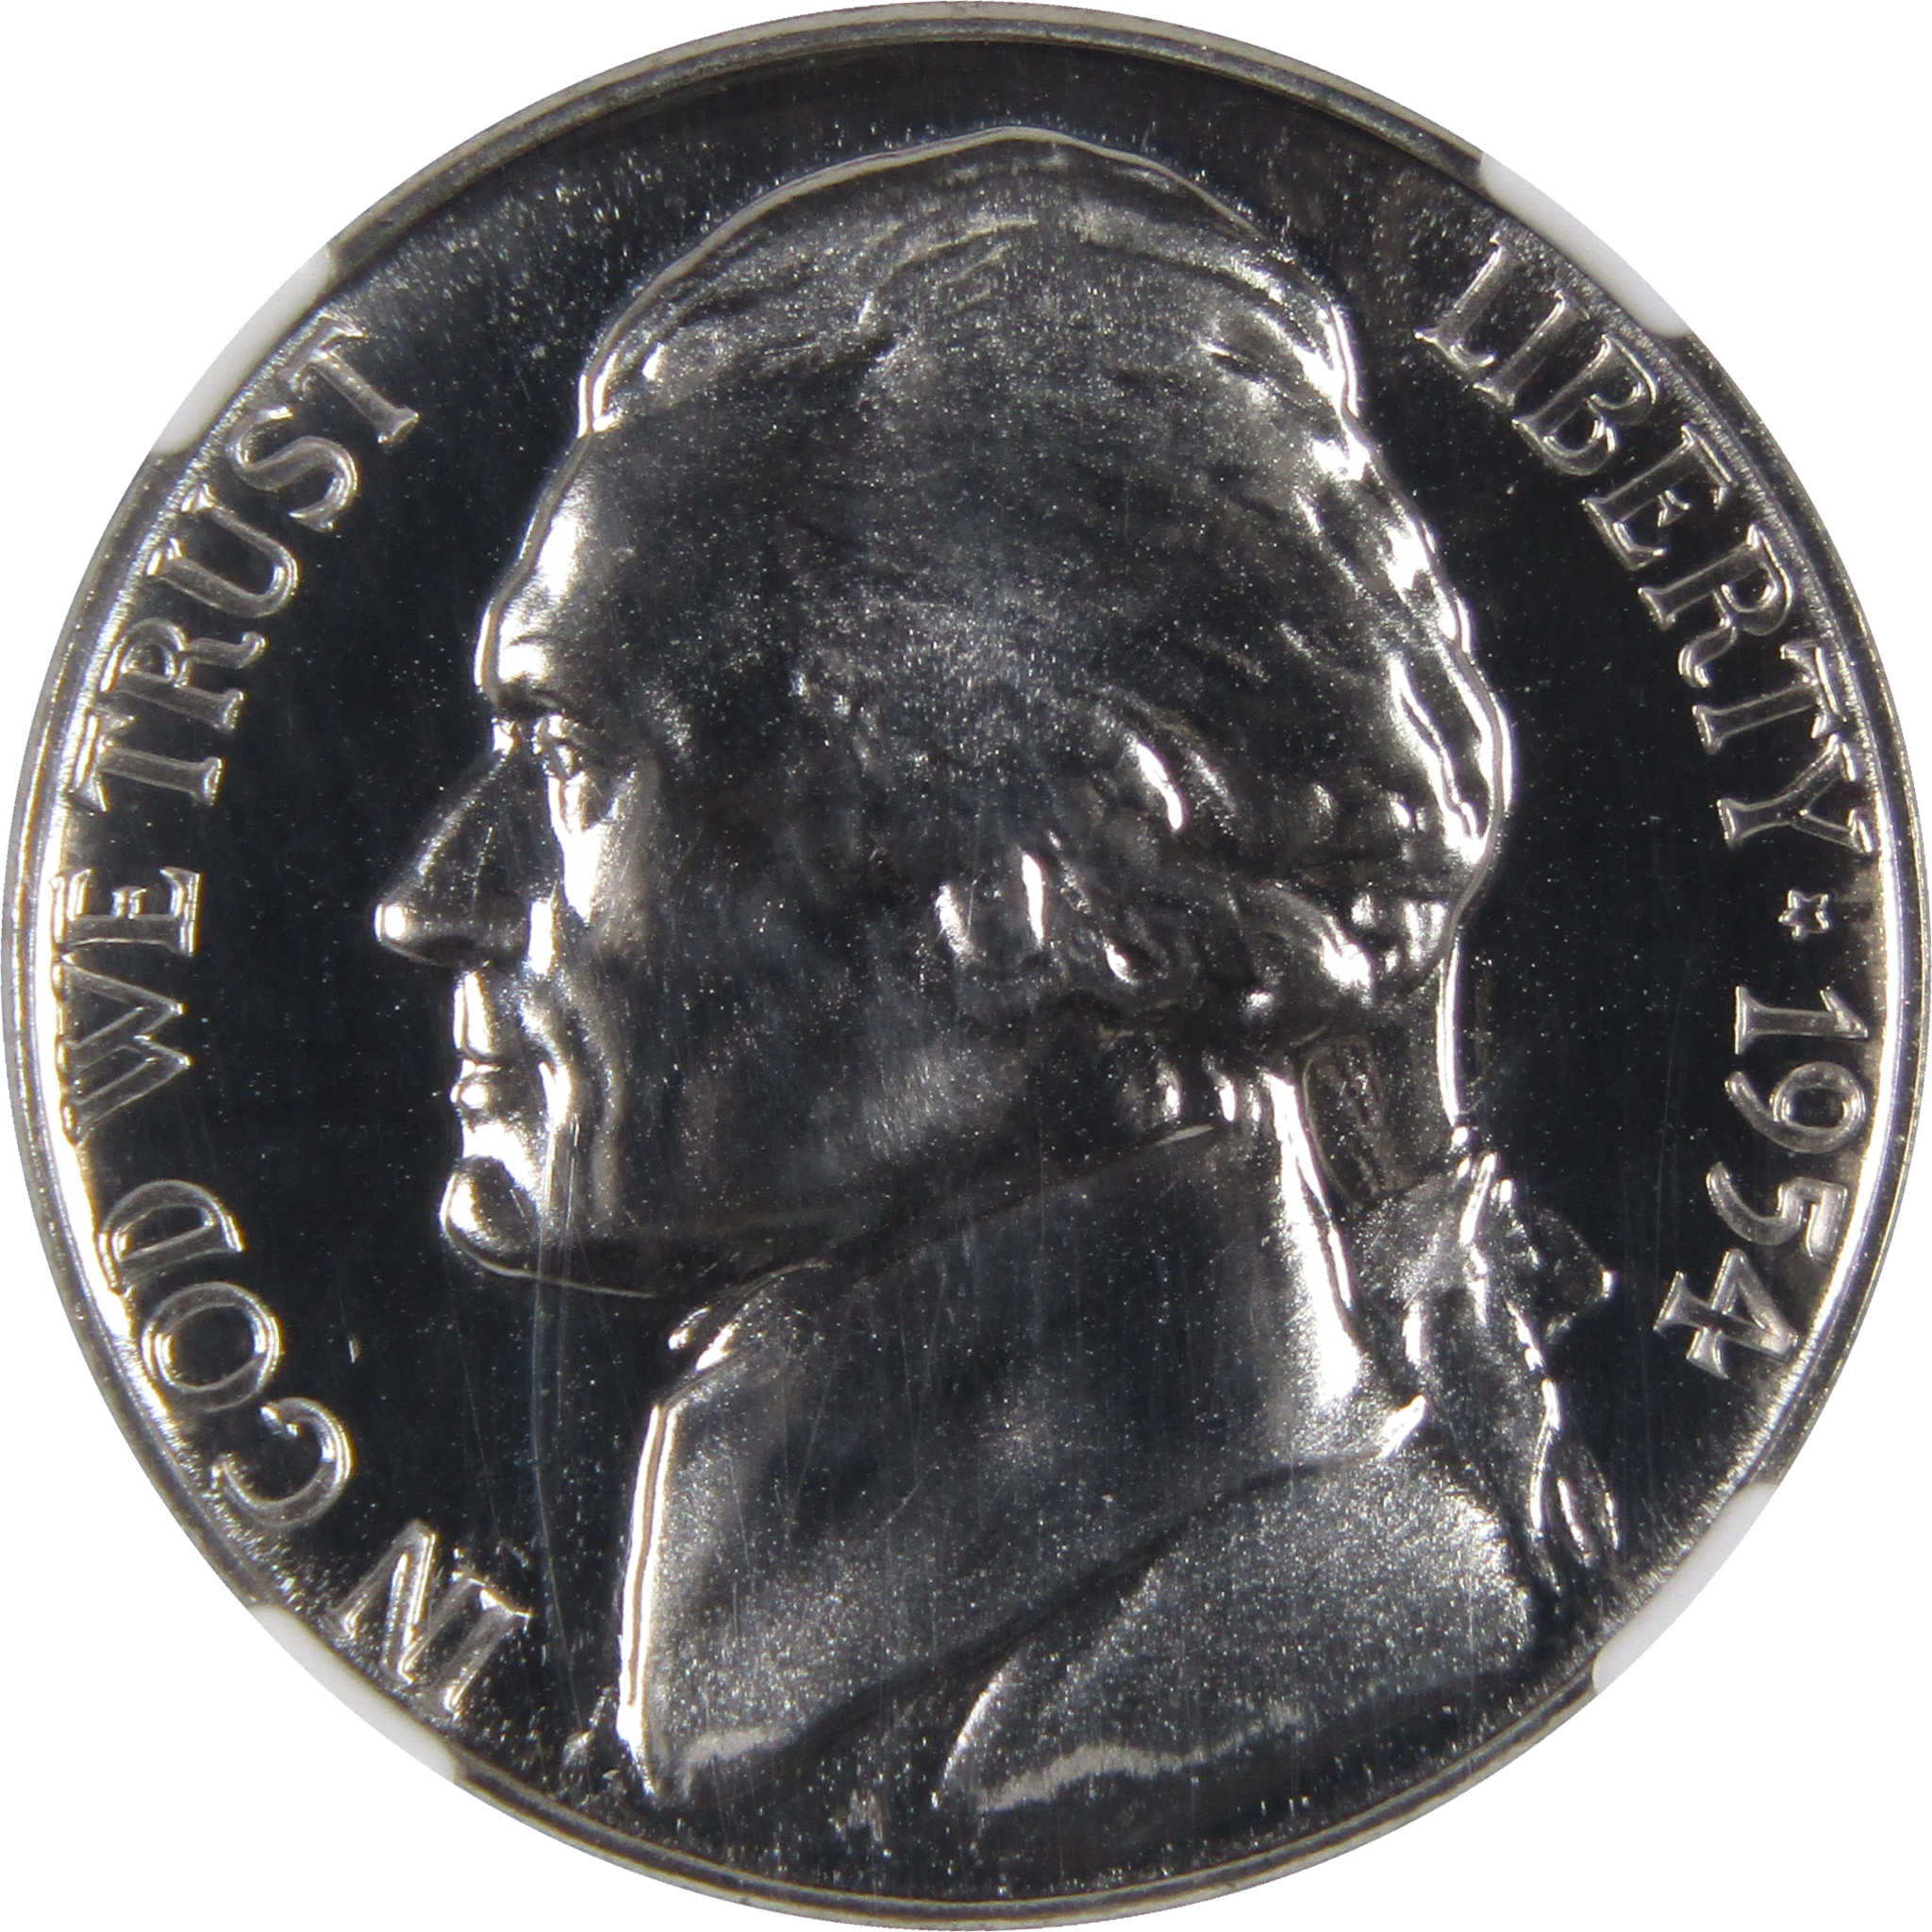 1954 Jefferson Nickel 5 Cent Piece PF 69 NGC 5c Proof Coin SKU:I2832